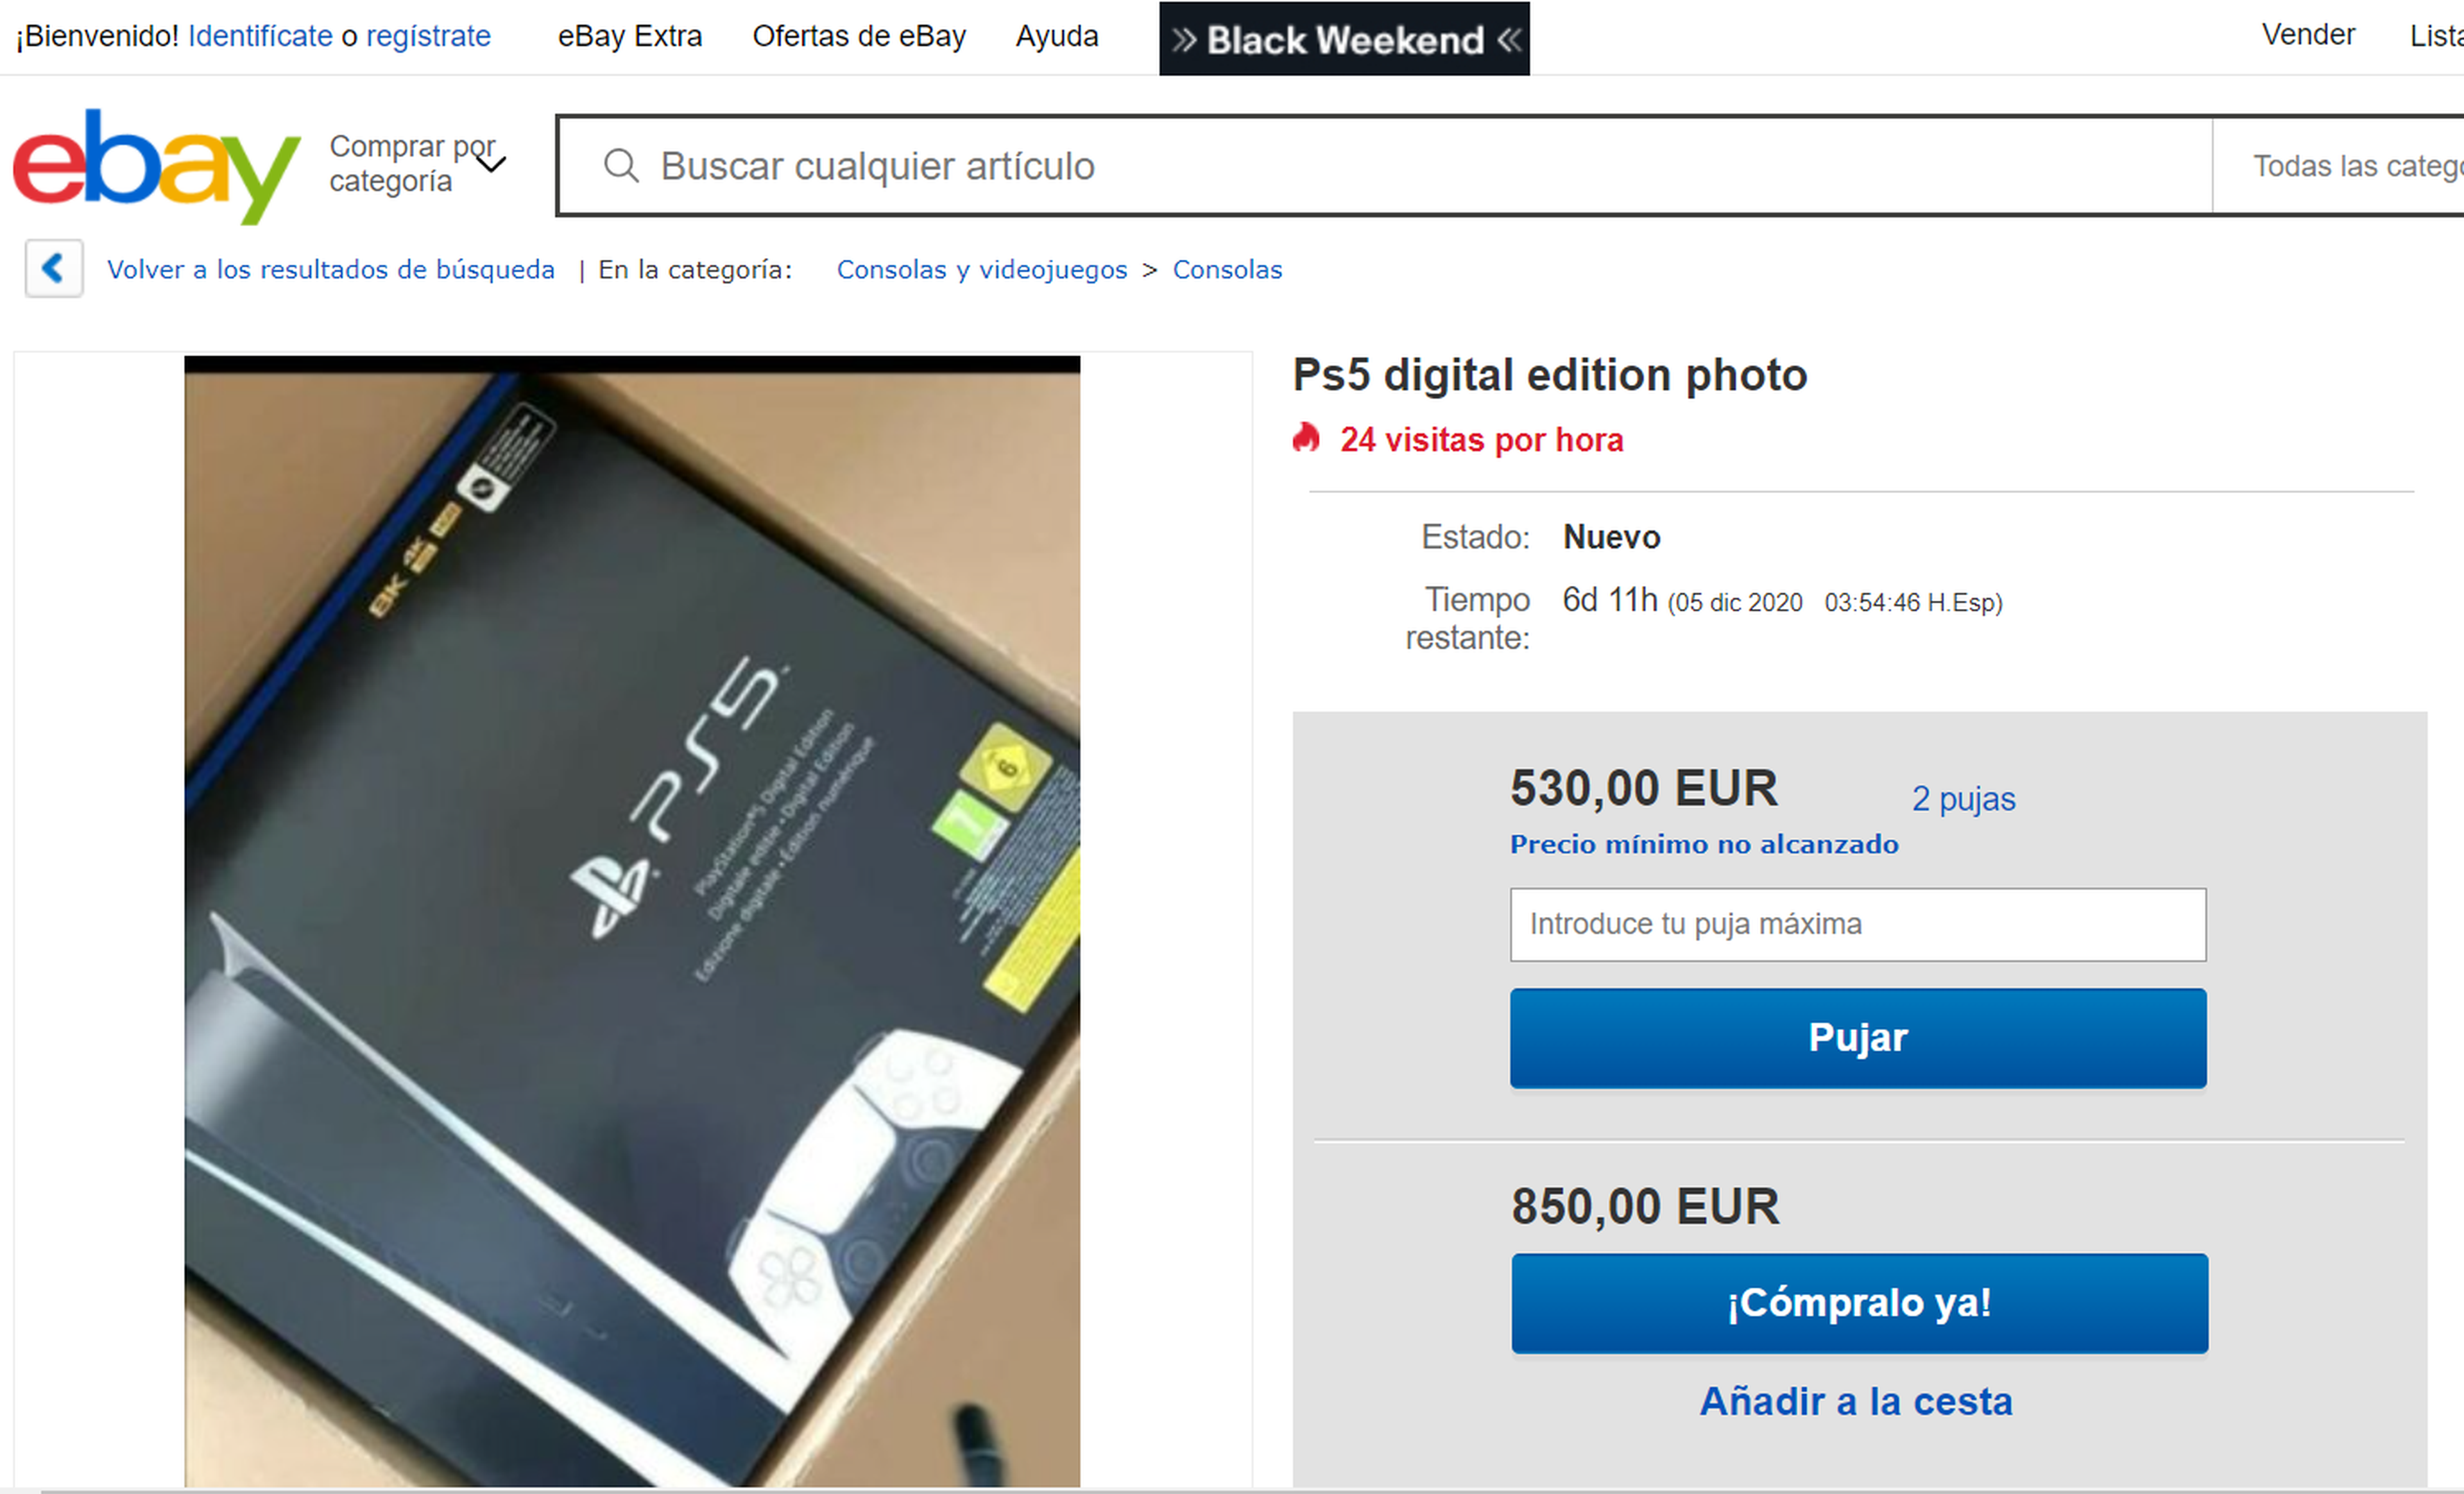 PS5 eBay